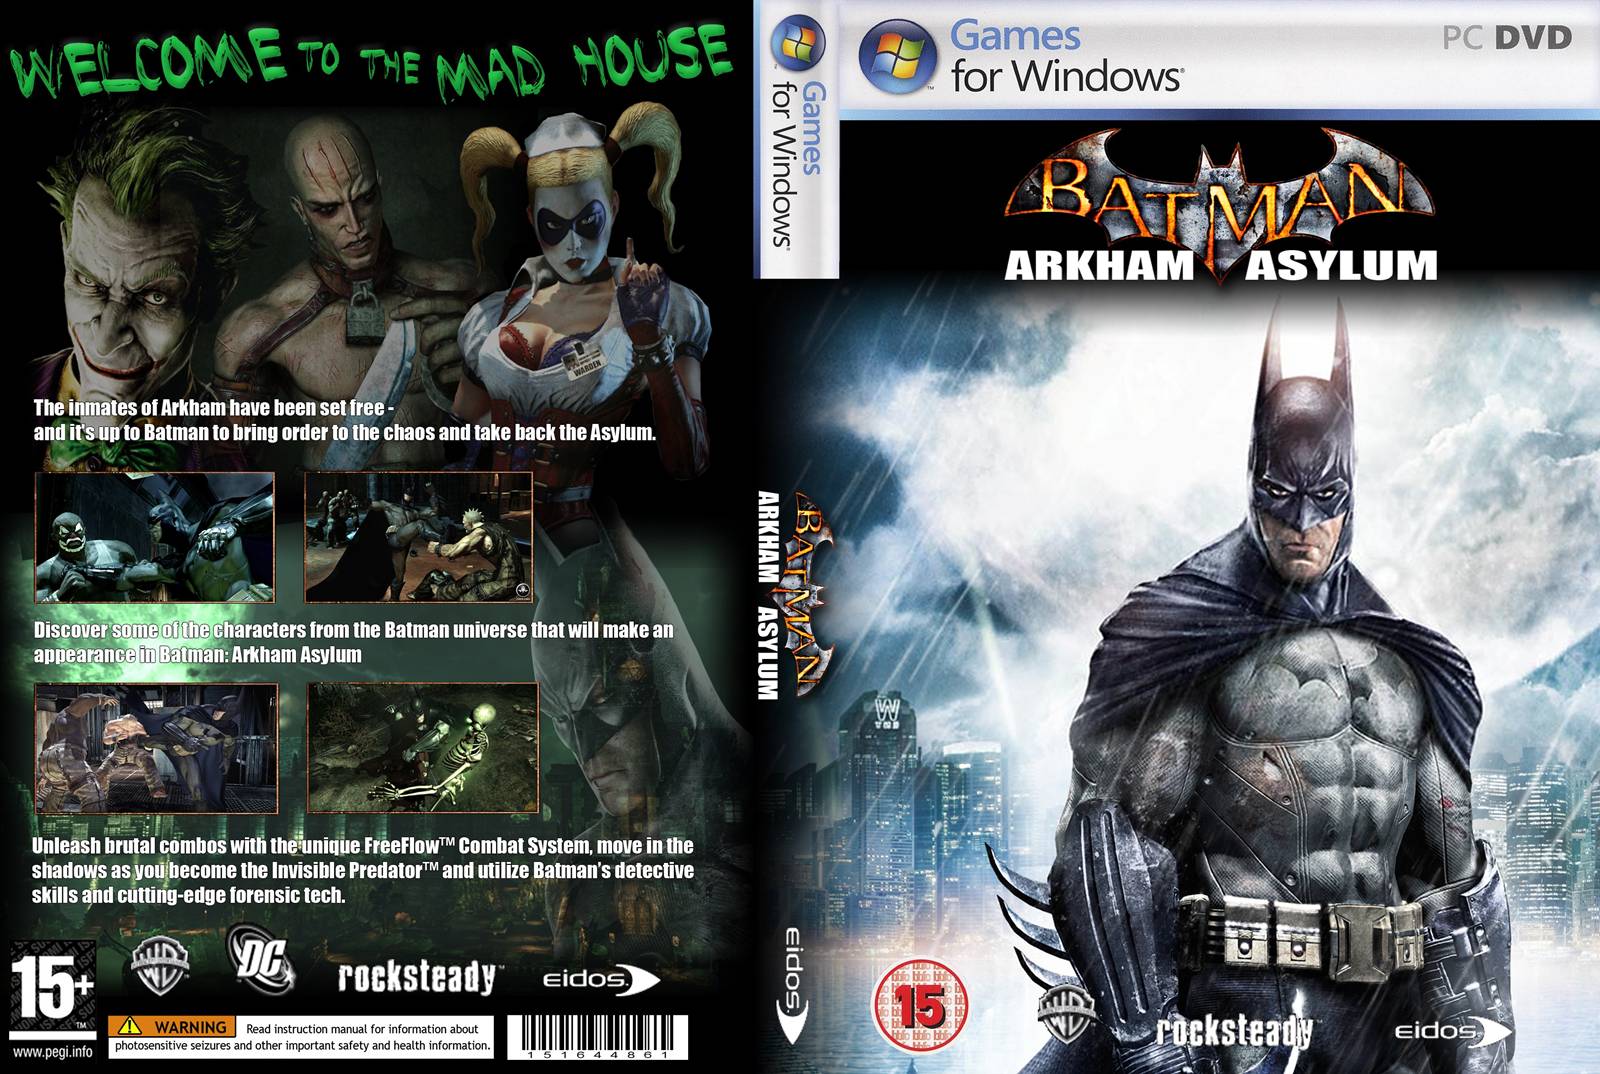 Arkham asylum game of the year edition. Диск Бэтмен Аркхем асилум. Batman Arkham Asylum диск. Бэтмен игра 2009. Бэтмен игры антология.